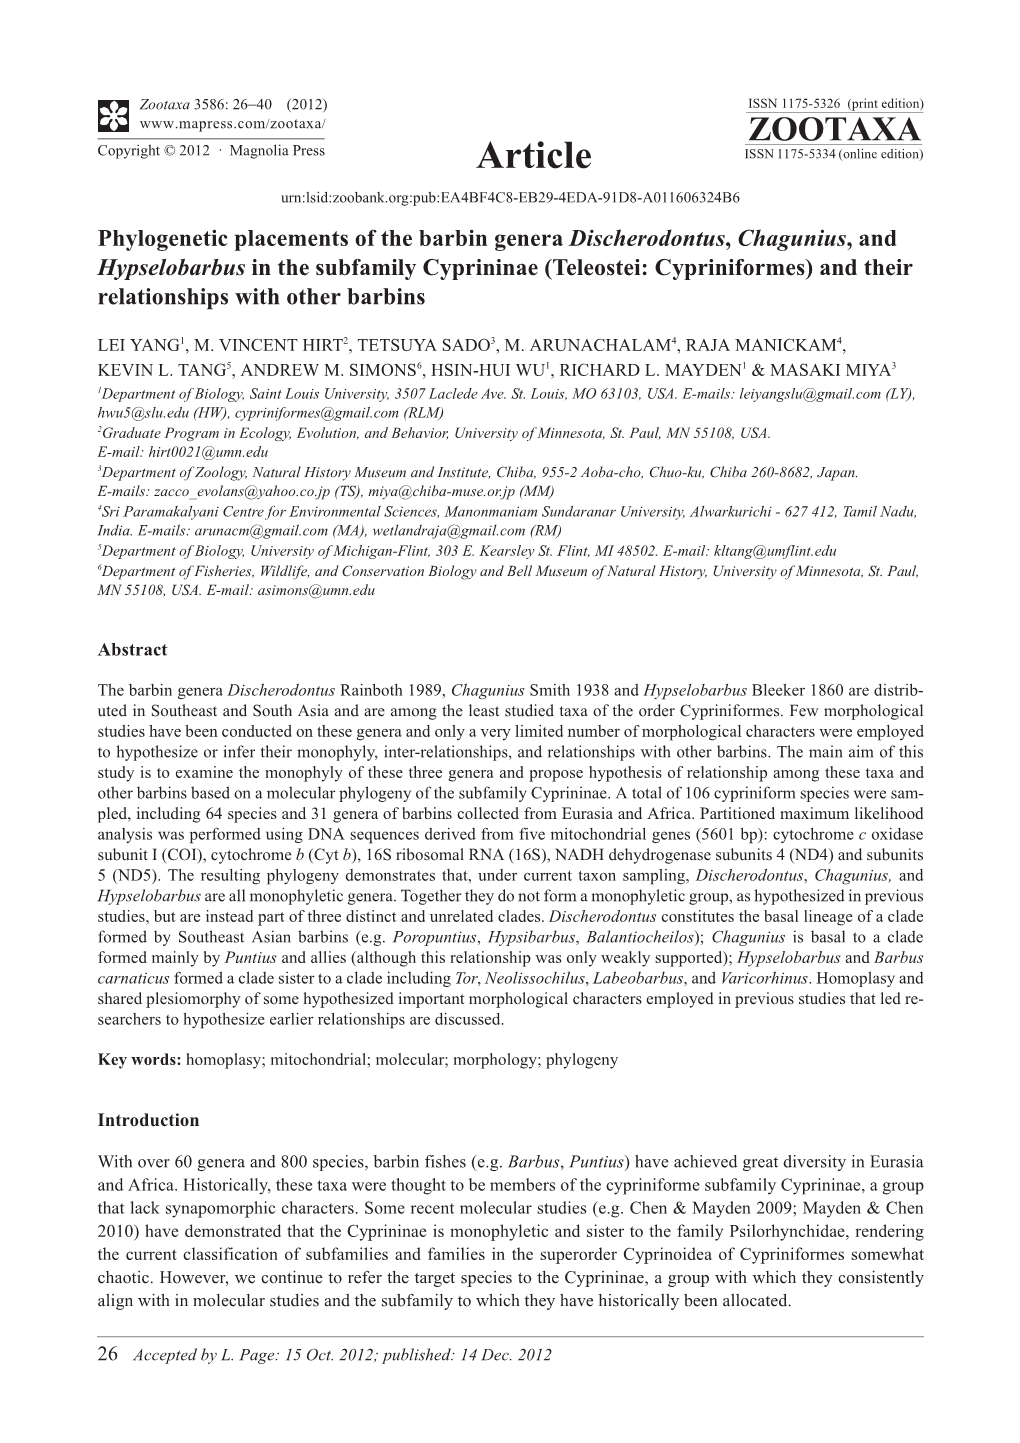 Phylogenetic Placements of the Barbin Genera Discherodontus, Chagunius, and Hypselobarbus in the Subfamily Cyprininae